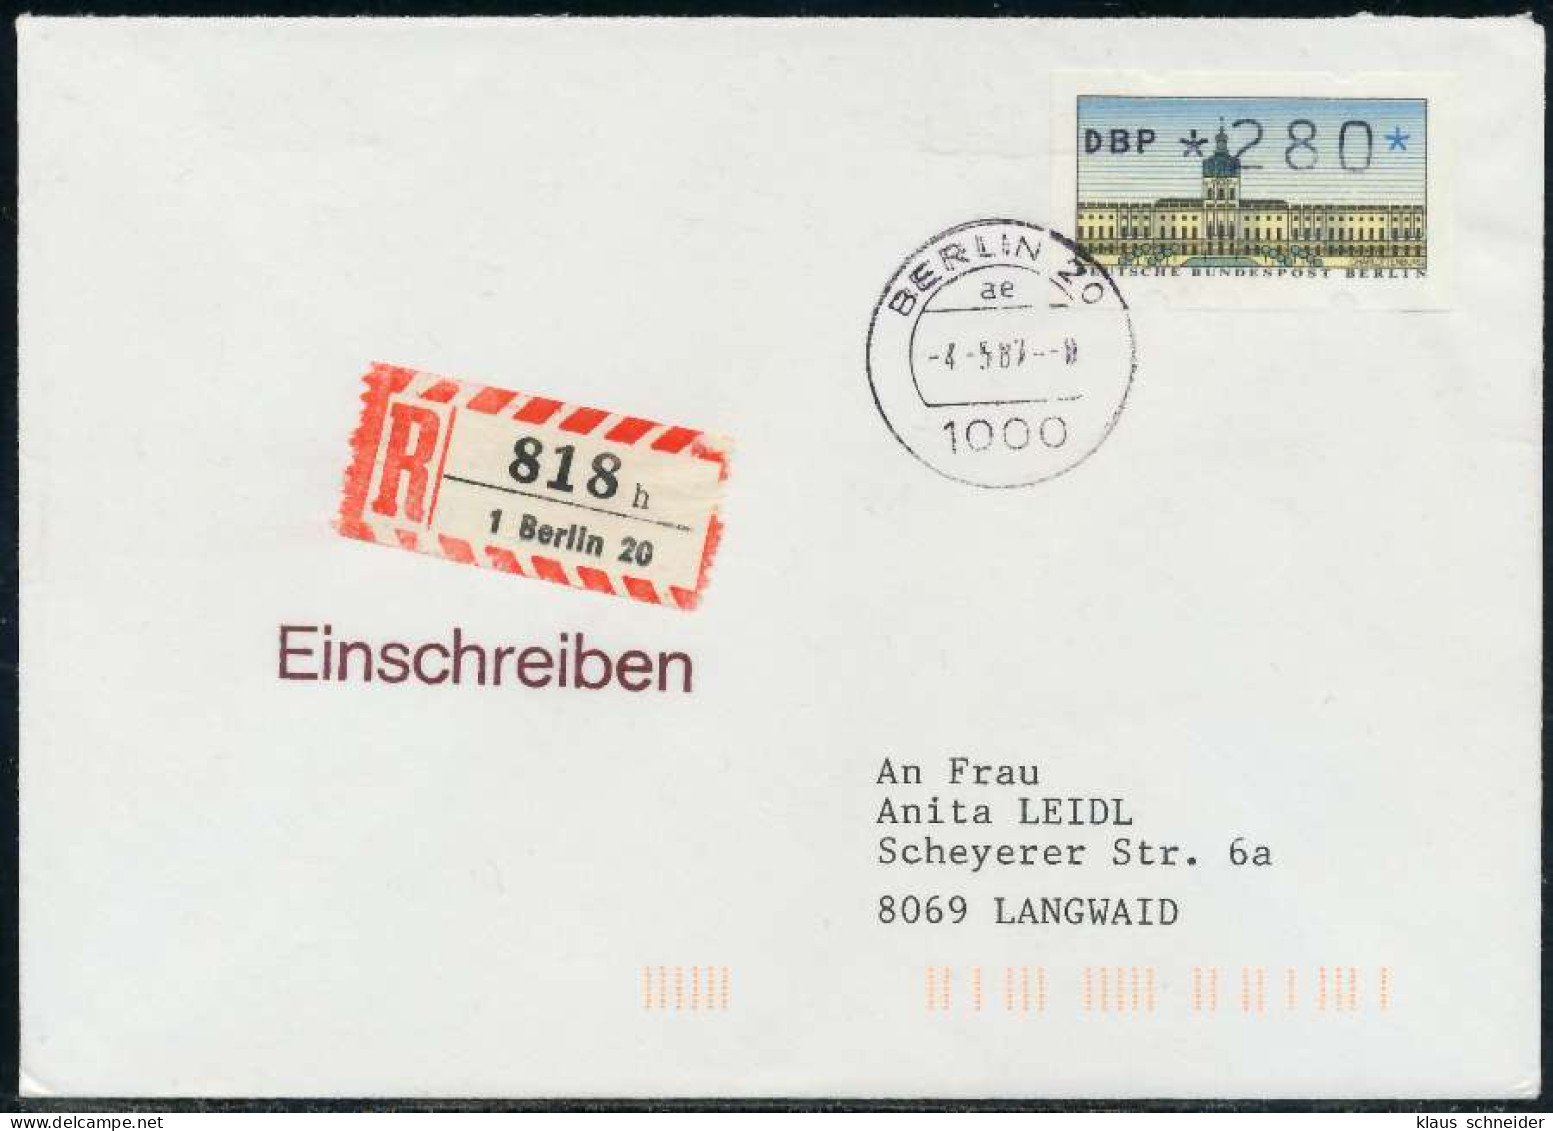 BERLIN ATM 1-280 BRIEF EINSCHREIBEN FDC X7E469A - Briefe U. Dokumente